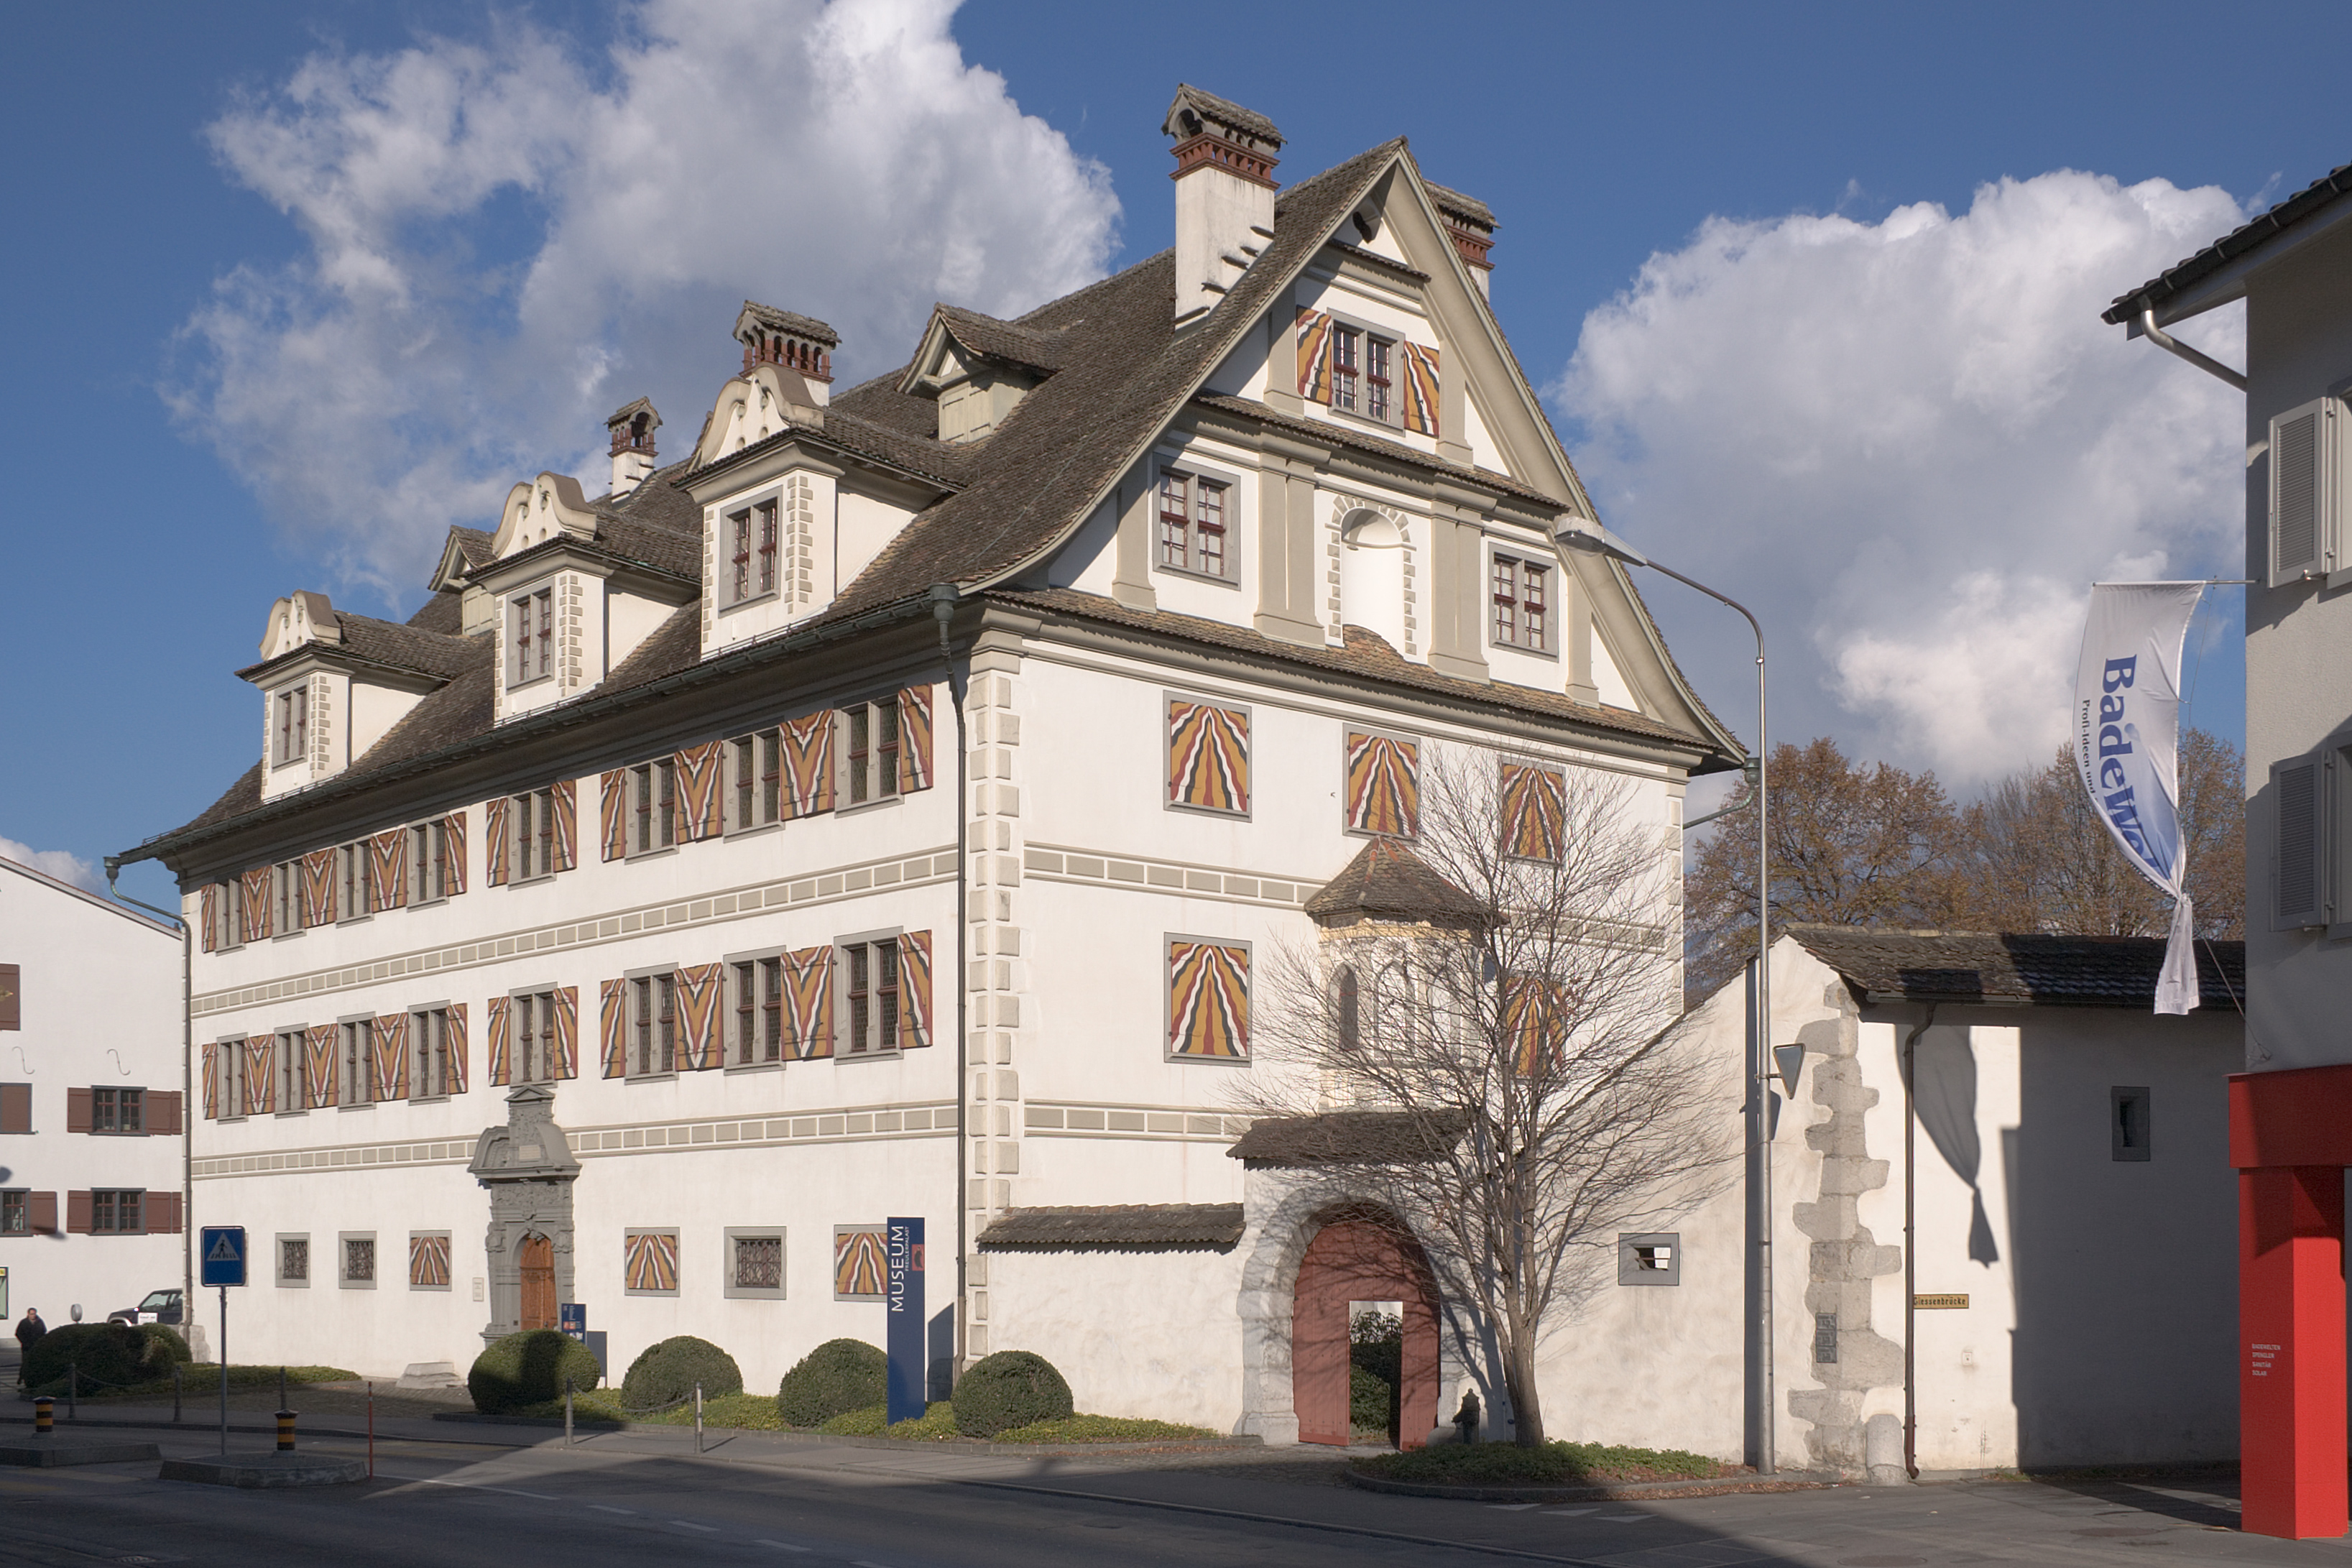 Cantonal museum in the Freulerpalast at Näfels, Switzerland. Photo taken on November 19, 2005.